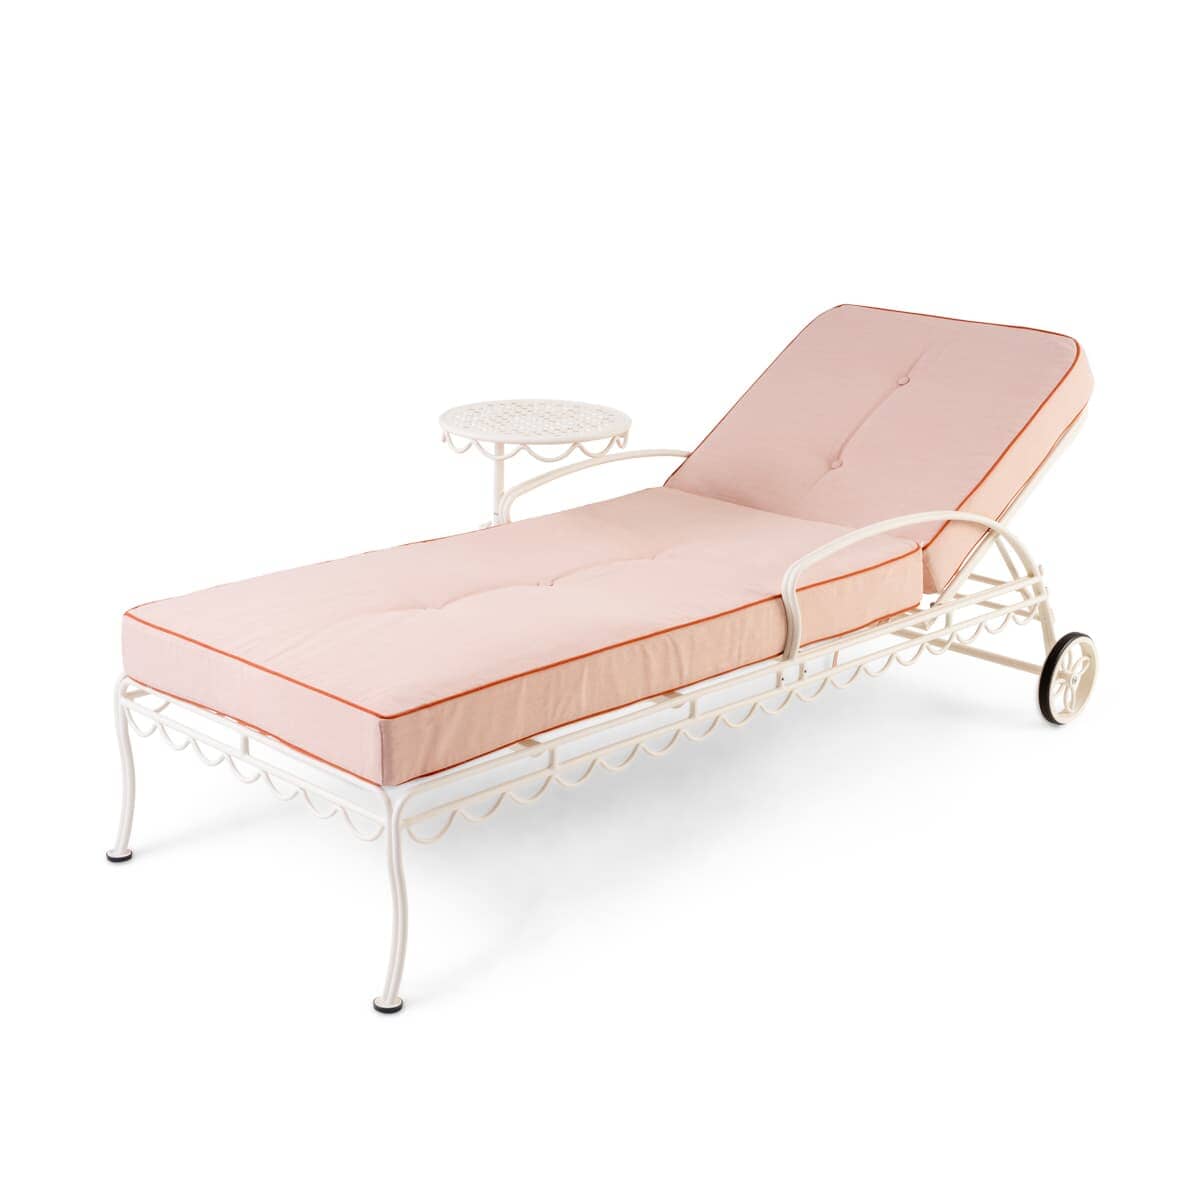 Studio image of riviera pink sun lounger